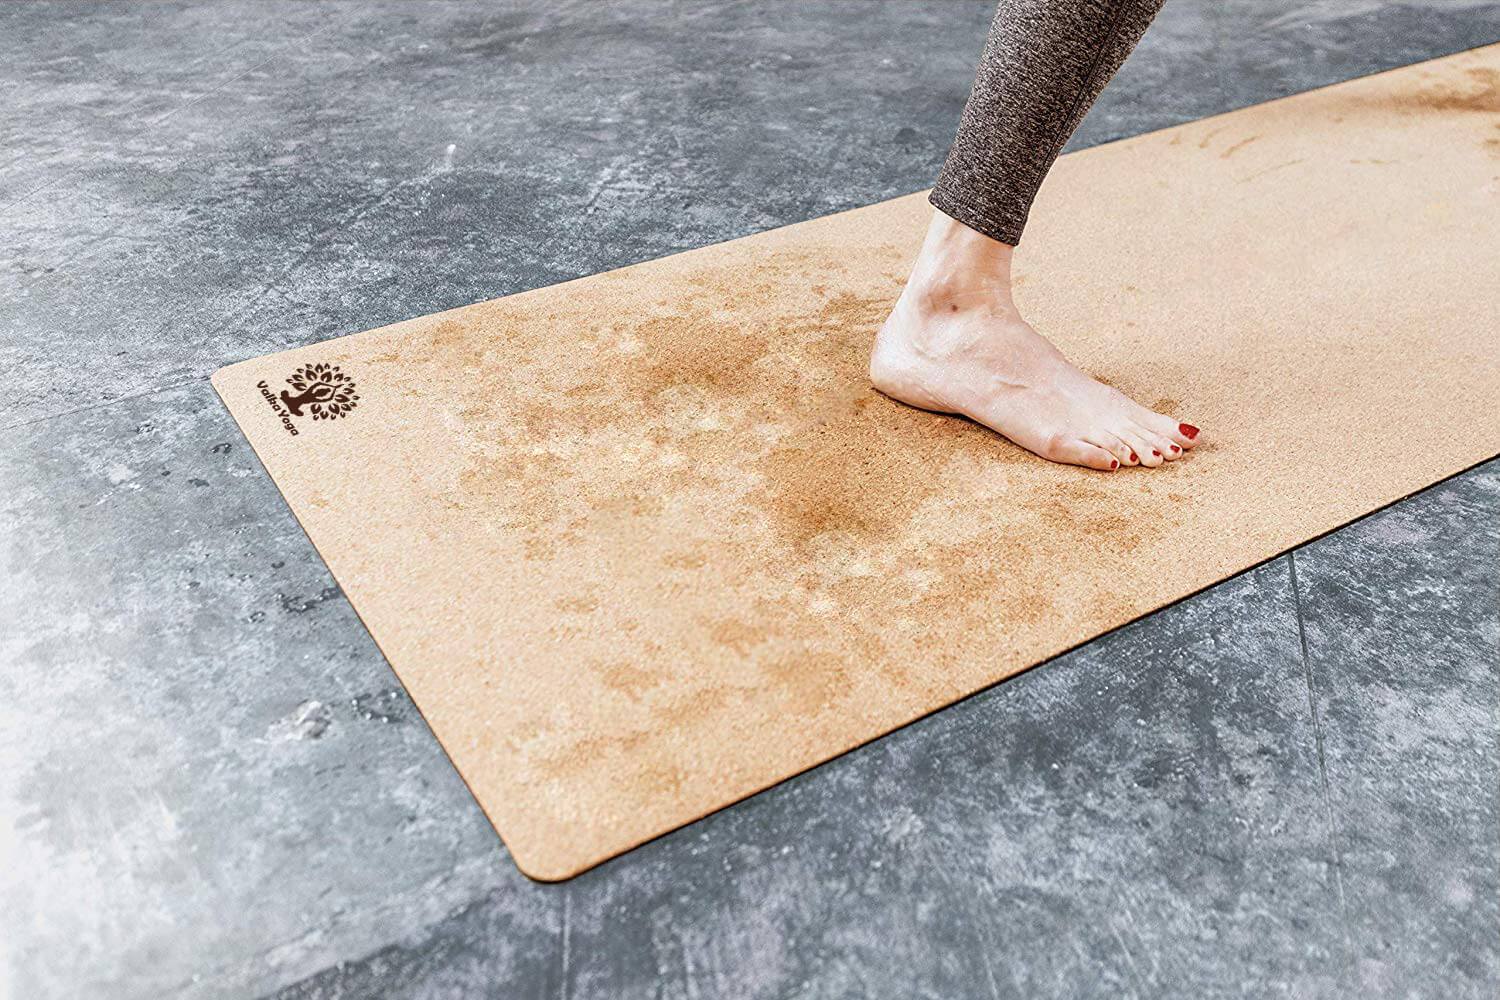 Cork yoga mat by Yoloha 